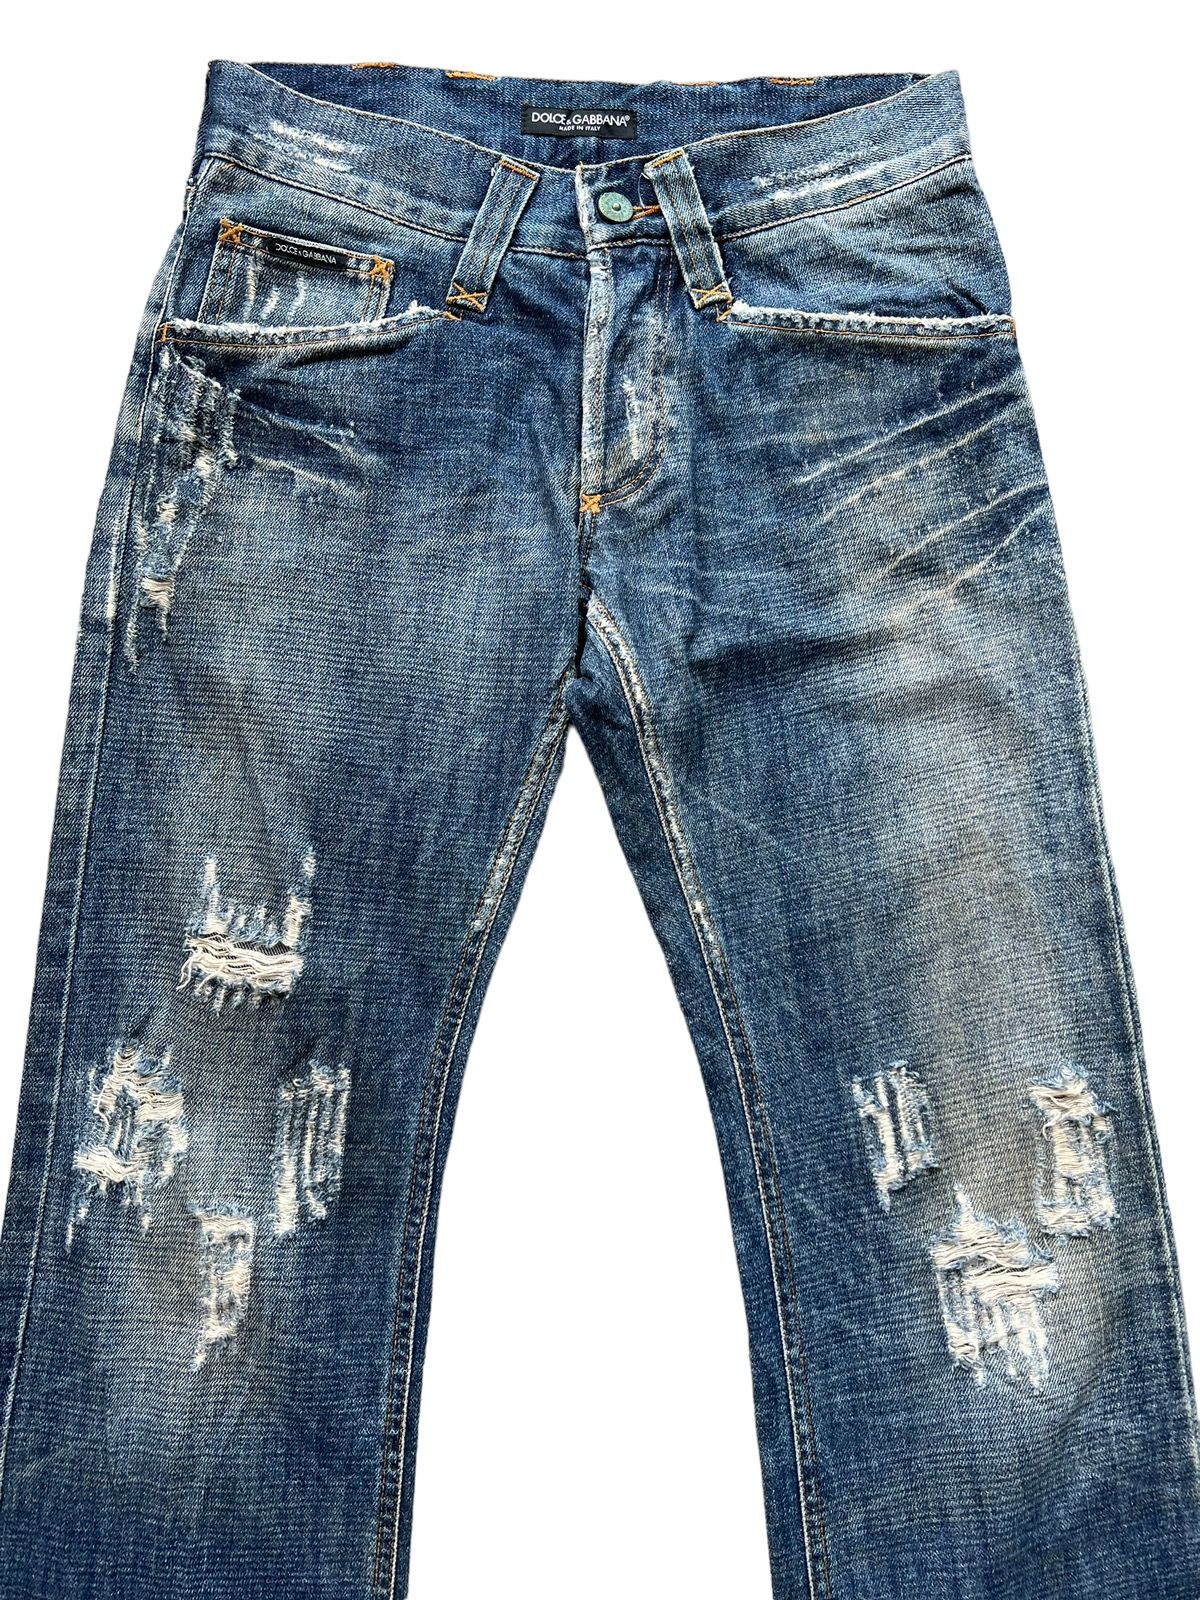 Dolce and Gabbana Crash Distressed Denim Jeans 31x32.5 - 4